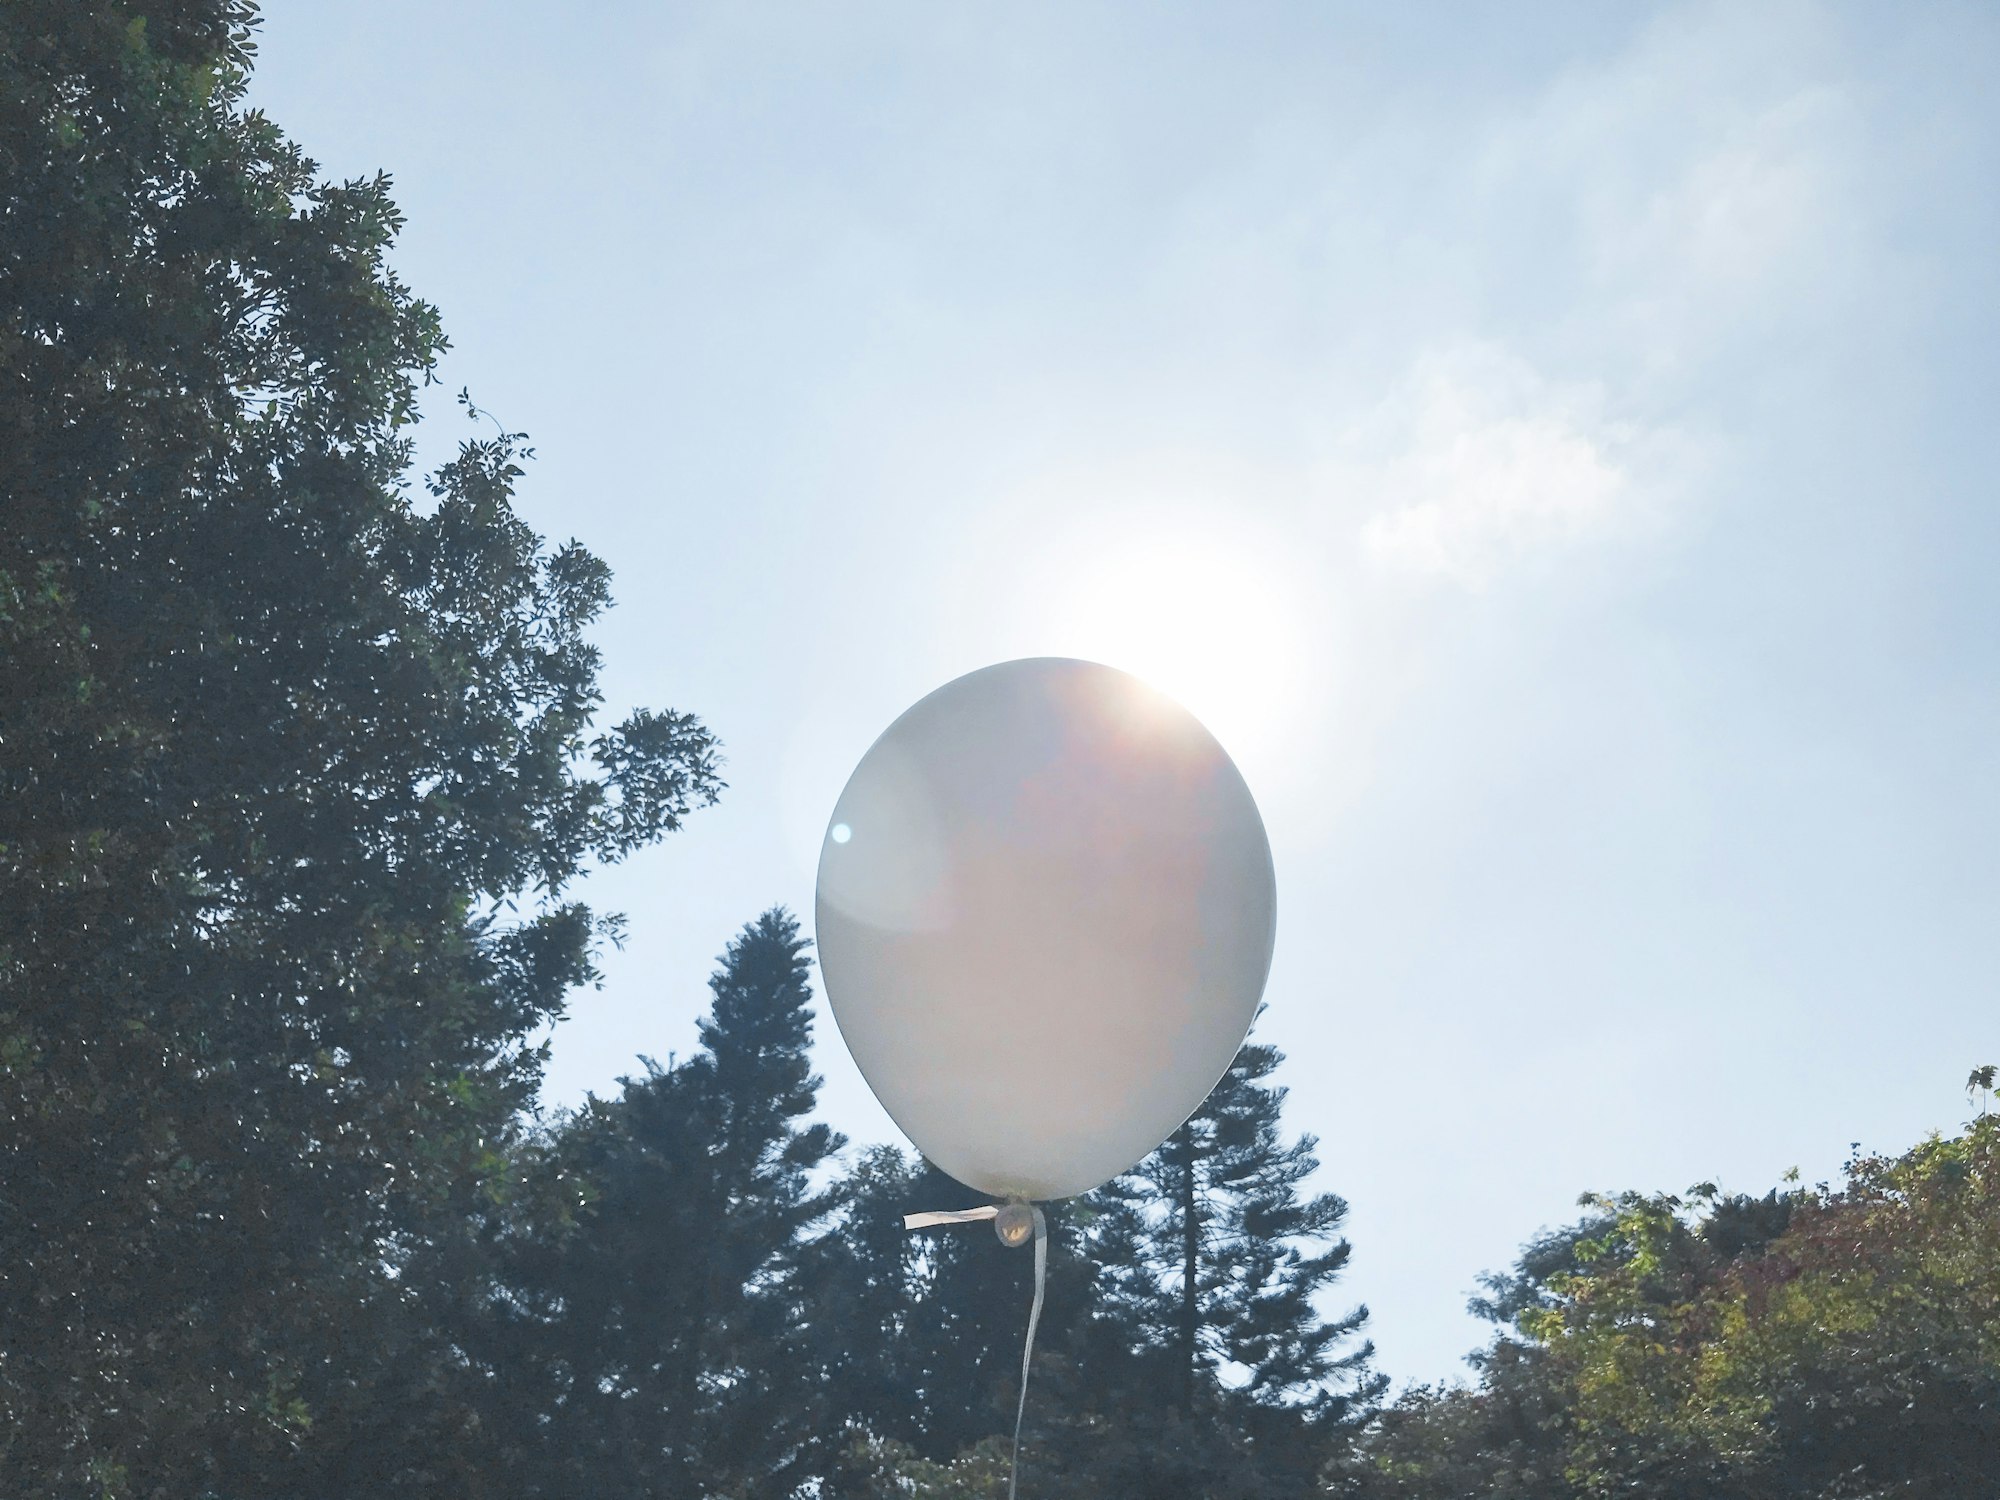 Ballooning Responsibilities & Identifying What Matters